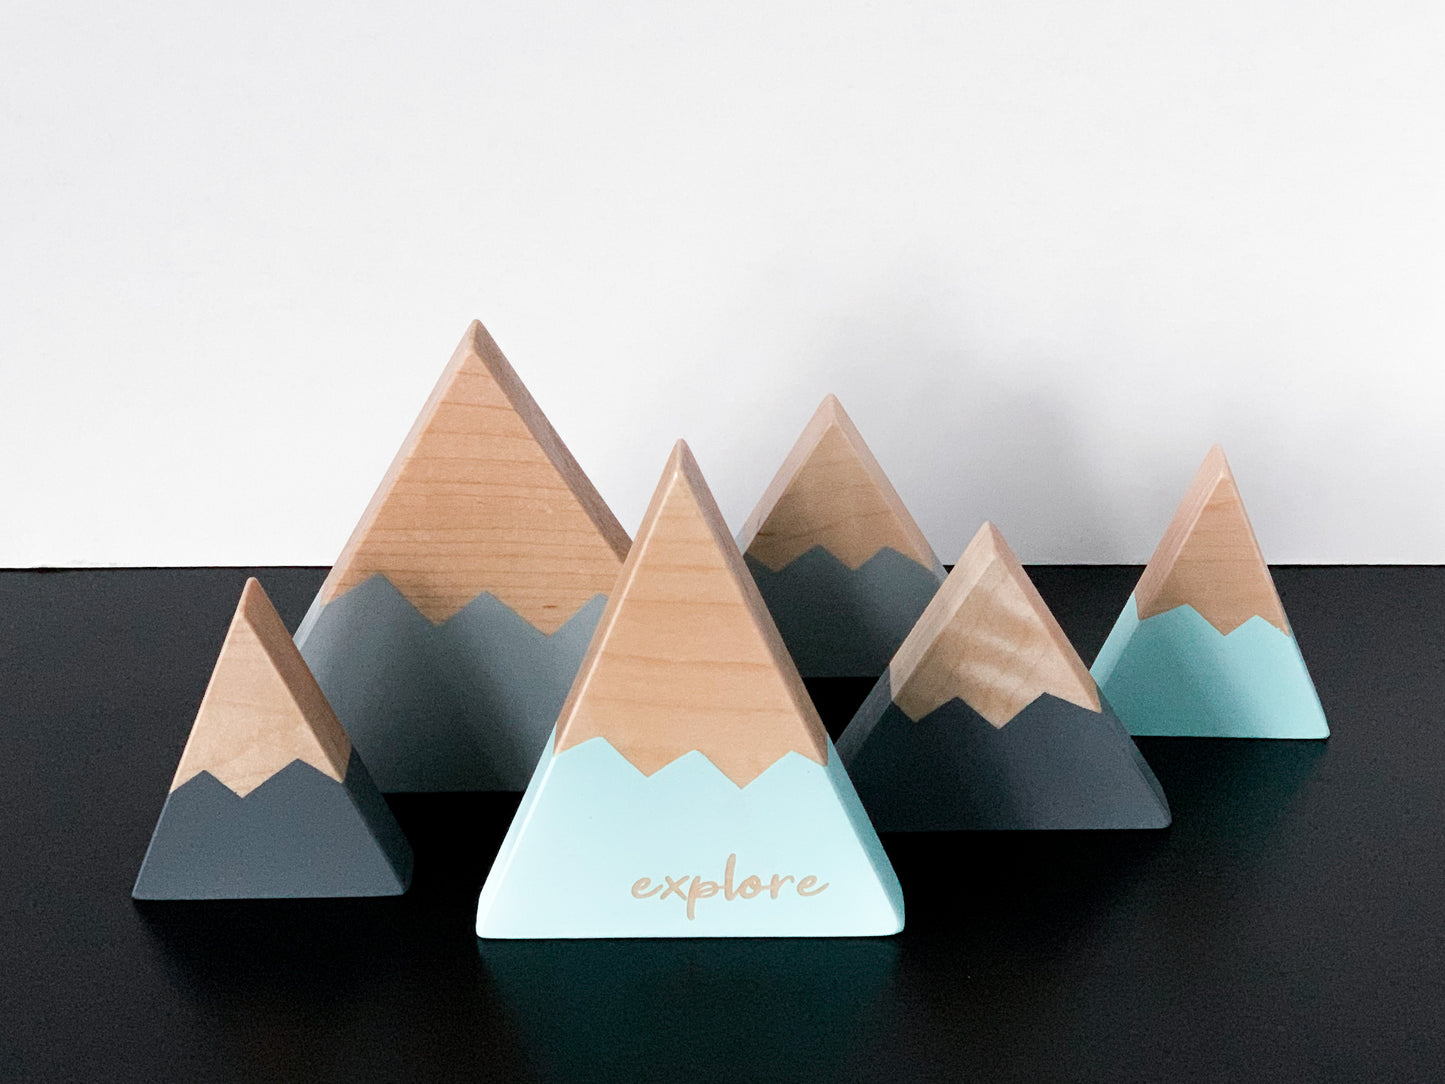 Wooden Mountain - Mint - "Explore" - CAVU Creations